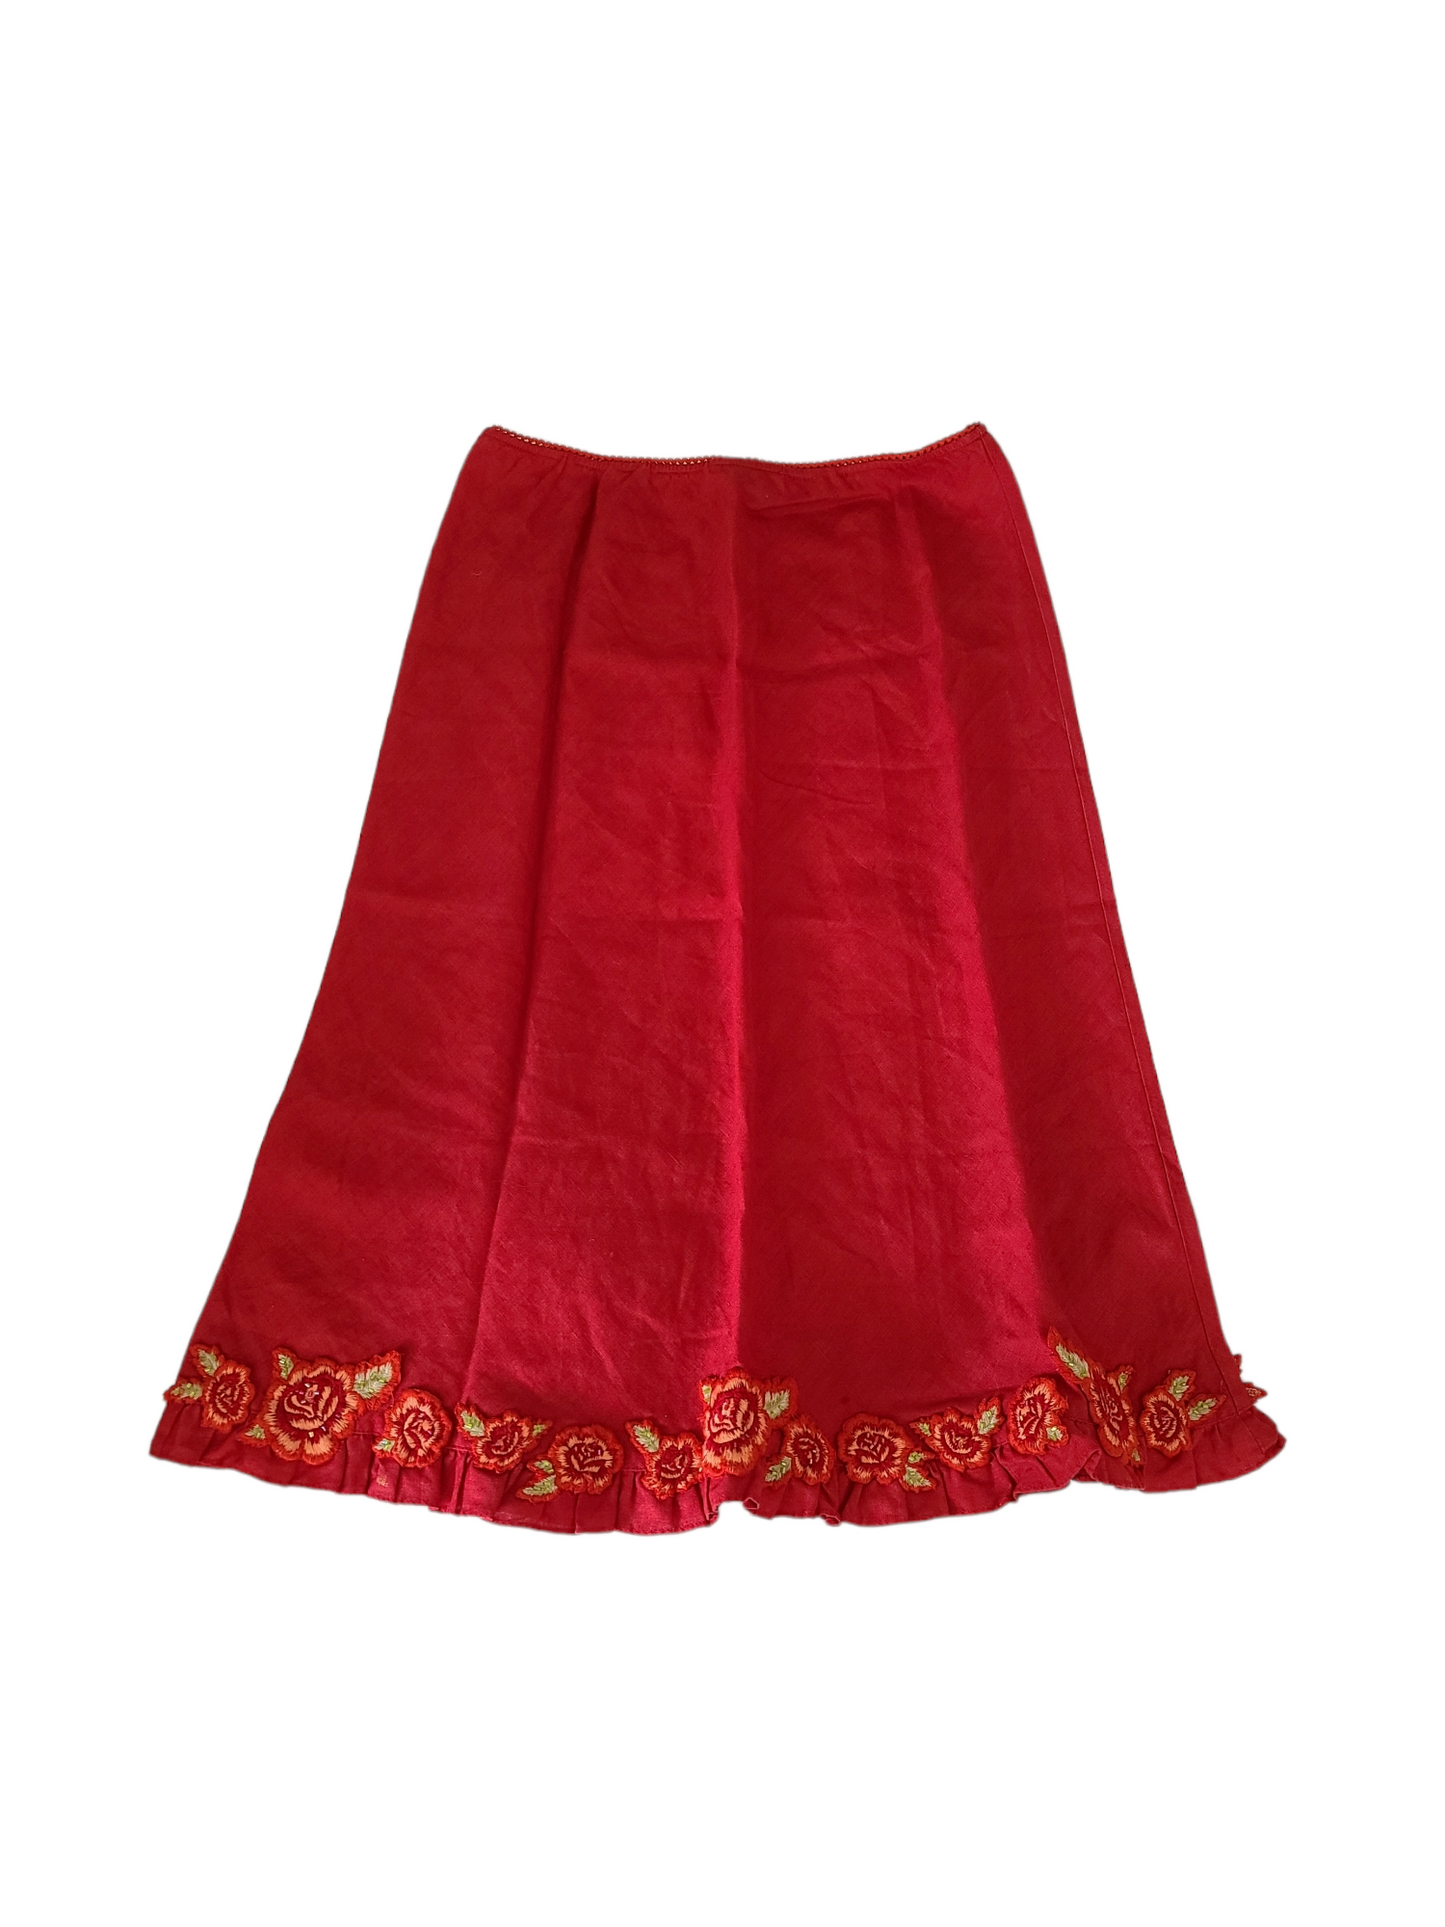 Jupe coquette y2k vintage lin coton made in france paris champetre romantic fleurs broderie cottagecore red skirt